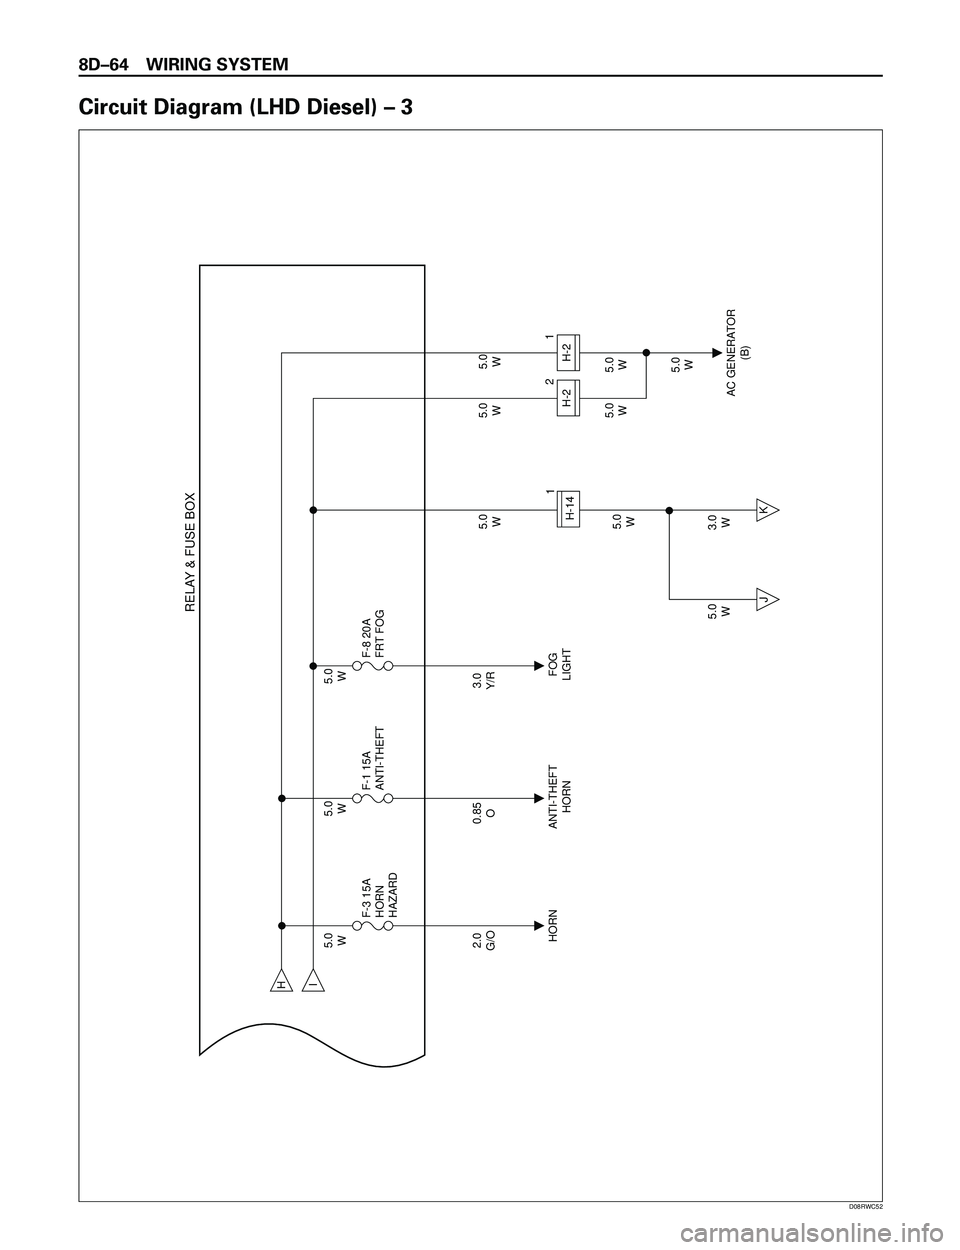 ISUZU TROOPER 1998  Service User Guide 8DÐ64 WIRING SYSTEM
Circuit Diagram (LHD Diesel) Ð 3
H
HORN ANTI-THEFT
HORNFOG
LIGHT 2.0
G/O5.0
W5.0
W5.0
W
5.0
W5.0
W5.0
W5.0
W
5.0
W 5.0
W5.0
W5.0
W
3.0
W F-3 15A
HORN
HAZARDI
AC GENERATOR
(B) 3.0